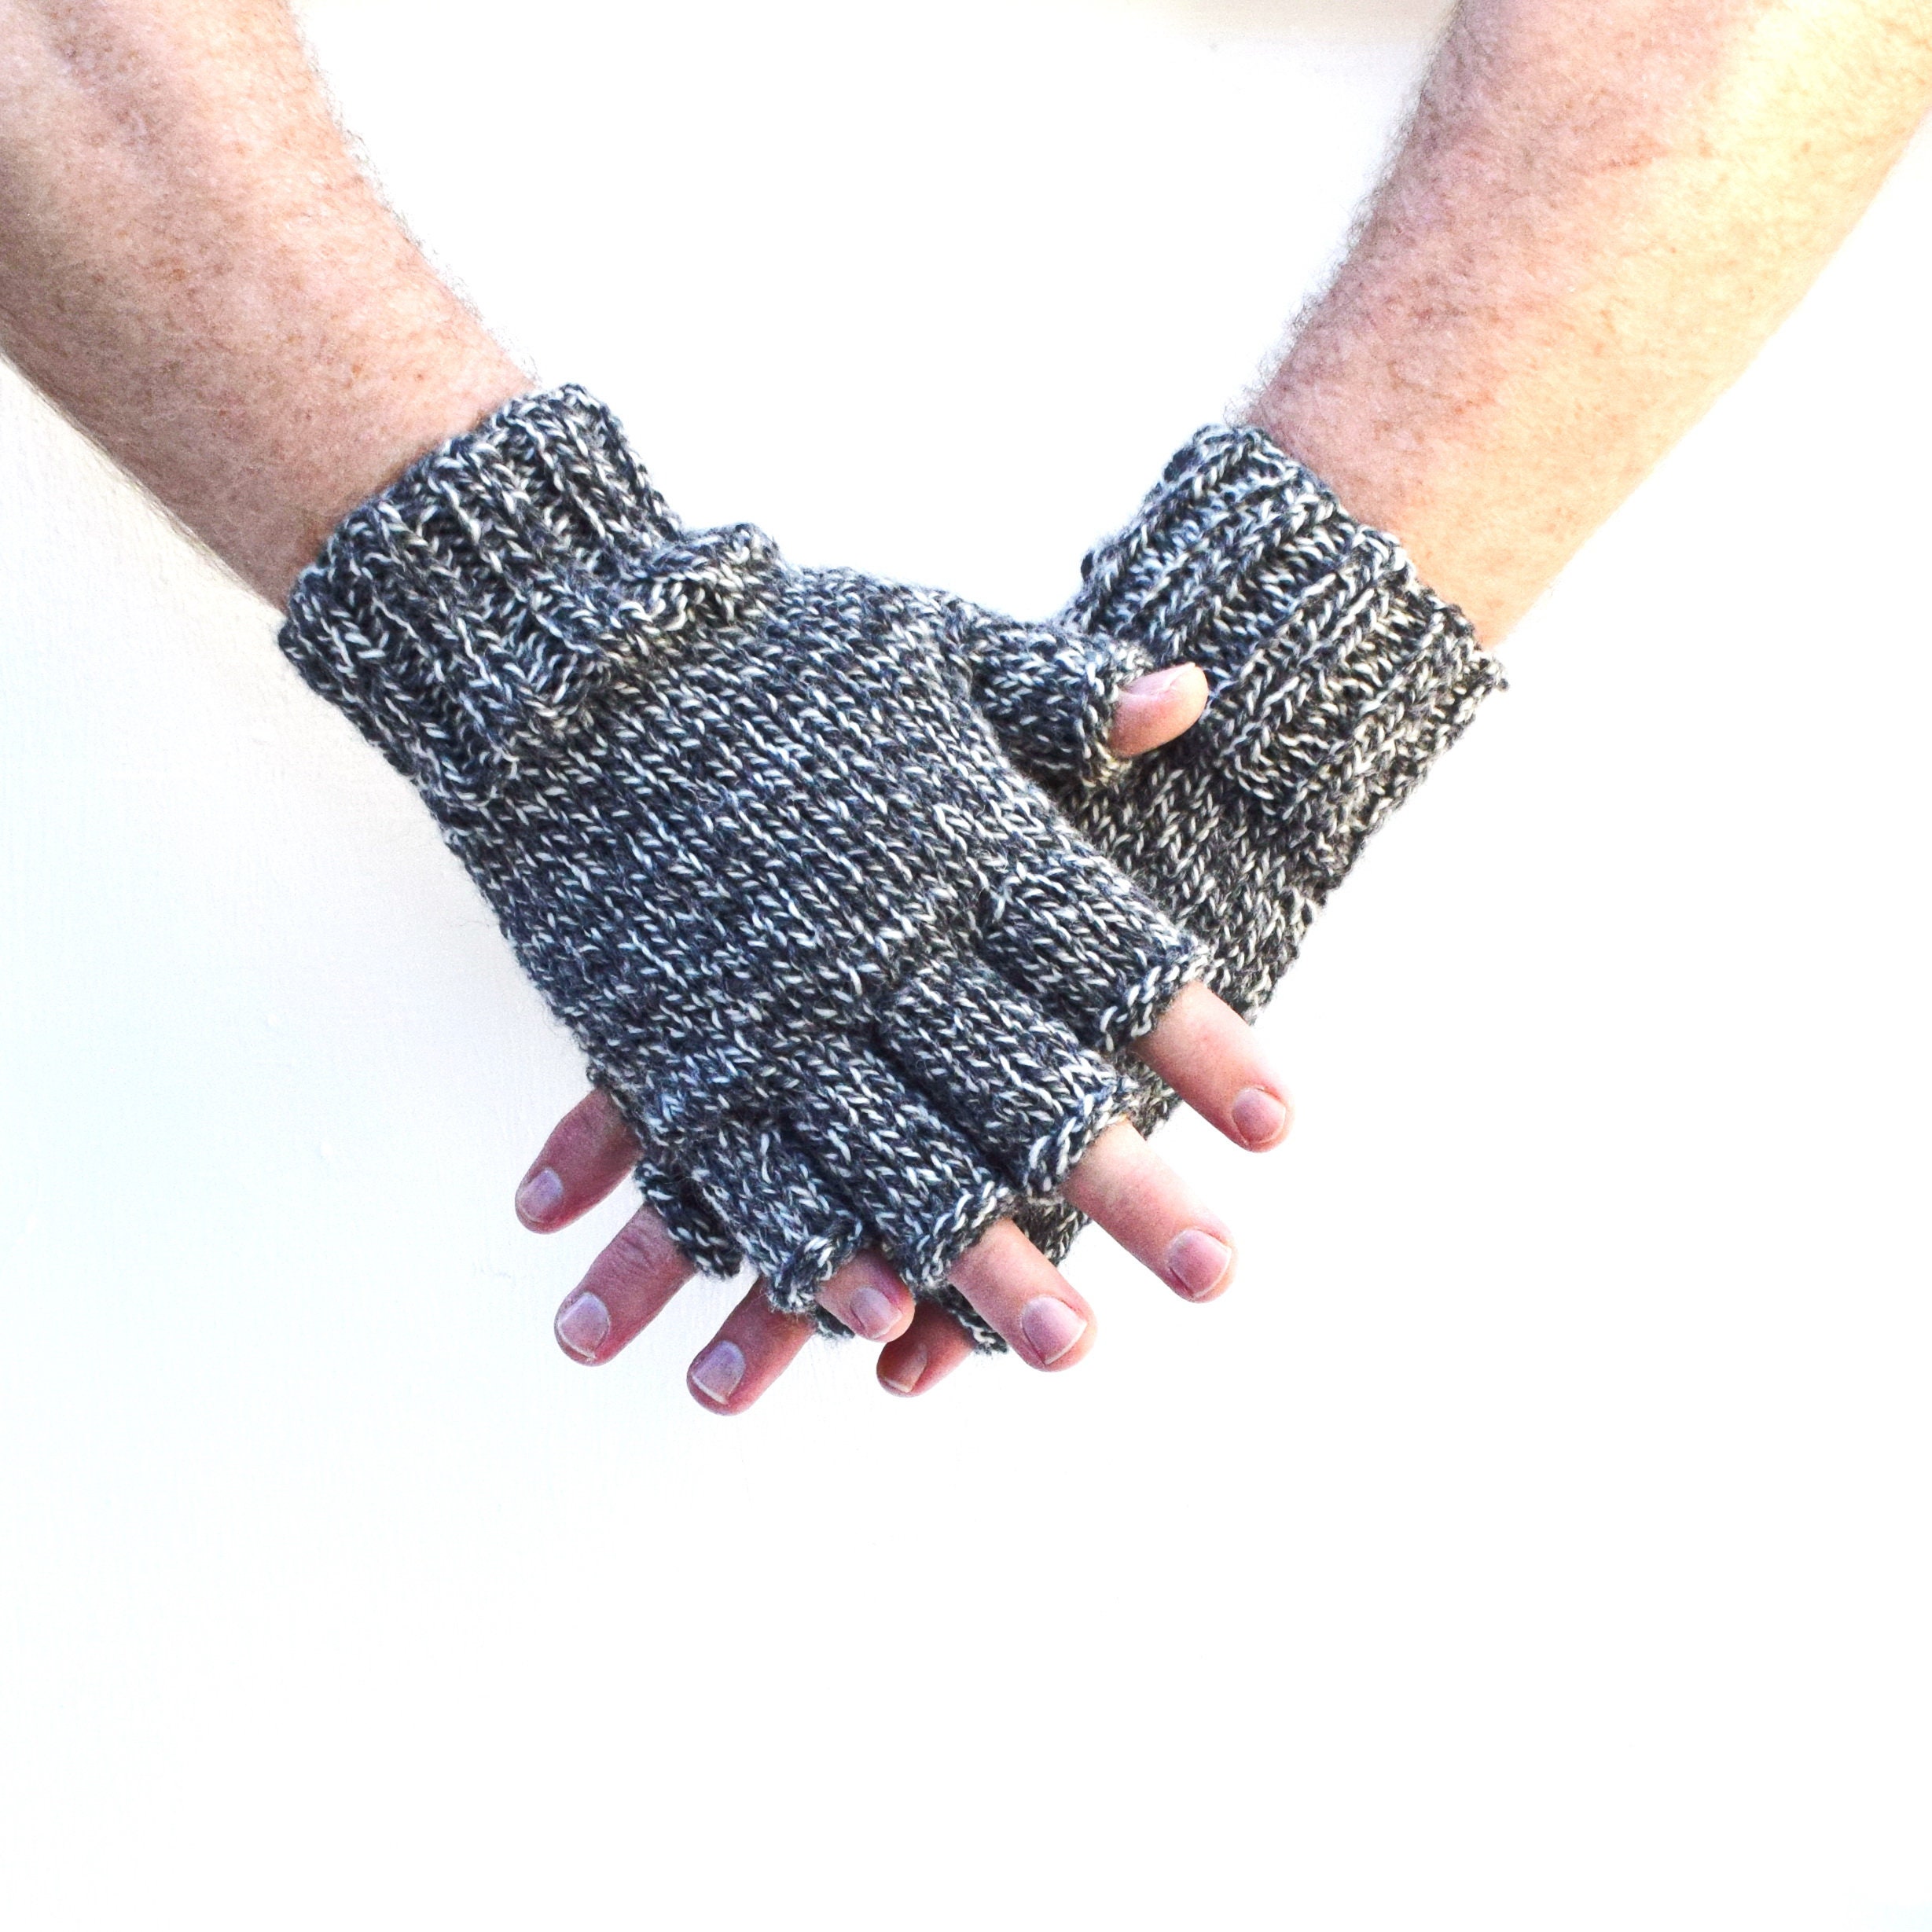 Mens Fingerless Gloves 100% Merino Wool Speckled Black and White Knit Mittens Texting Hiking Gloves Handmade Gift Christmas Winter Holidays